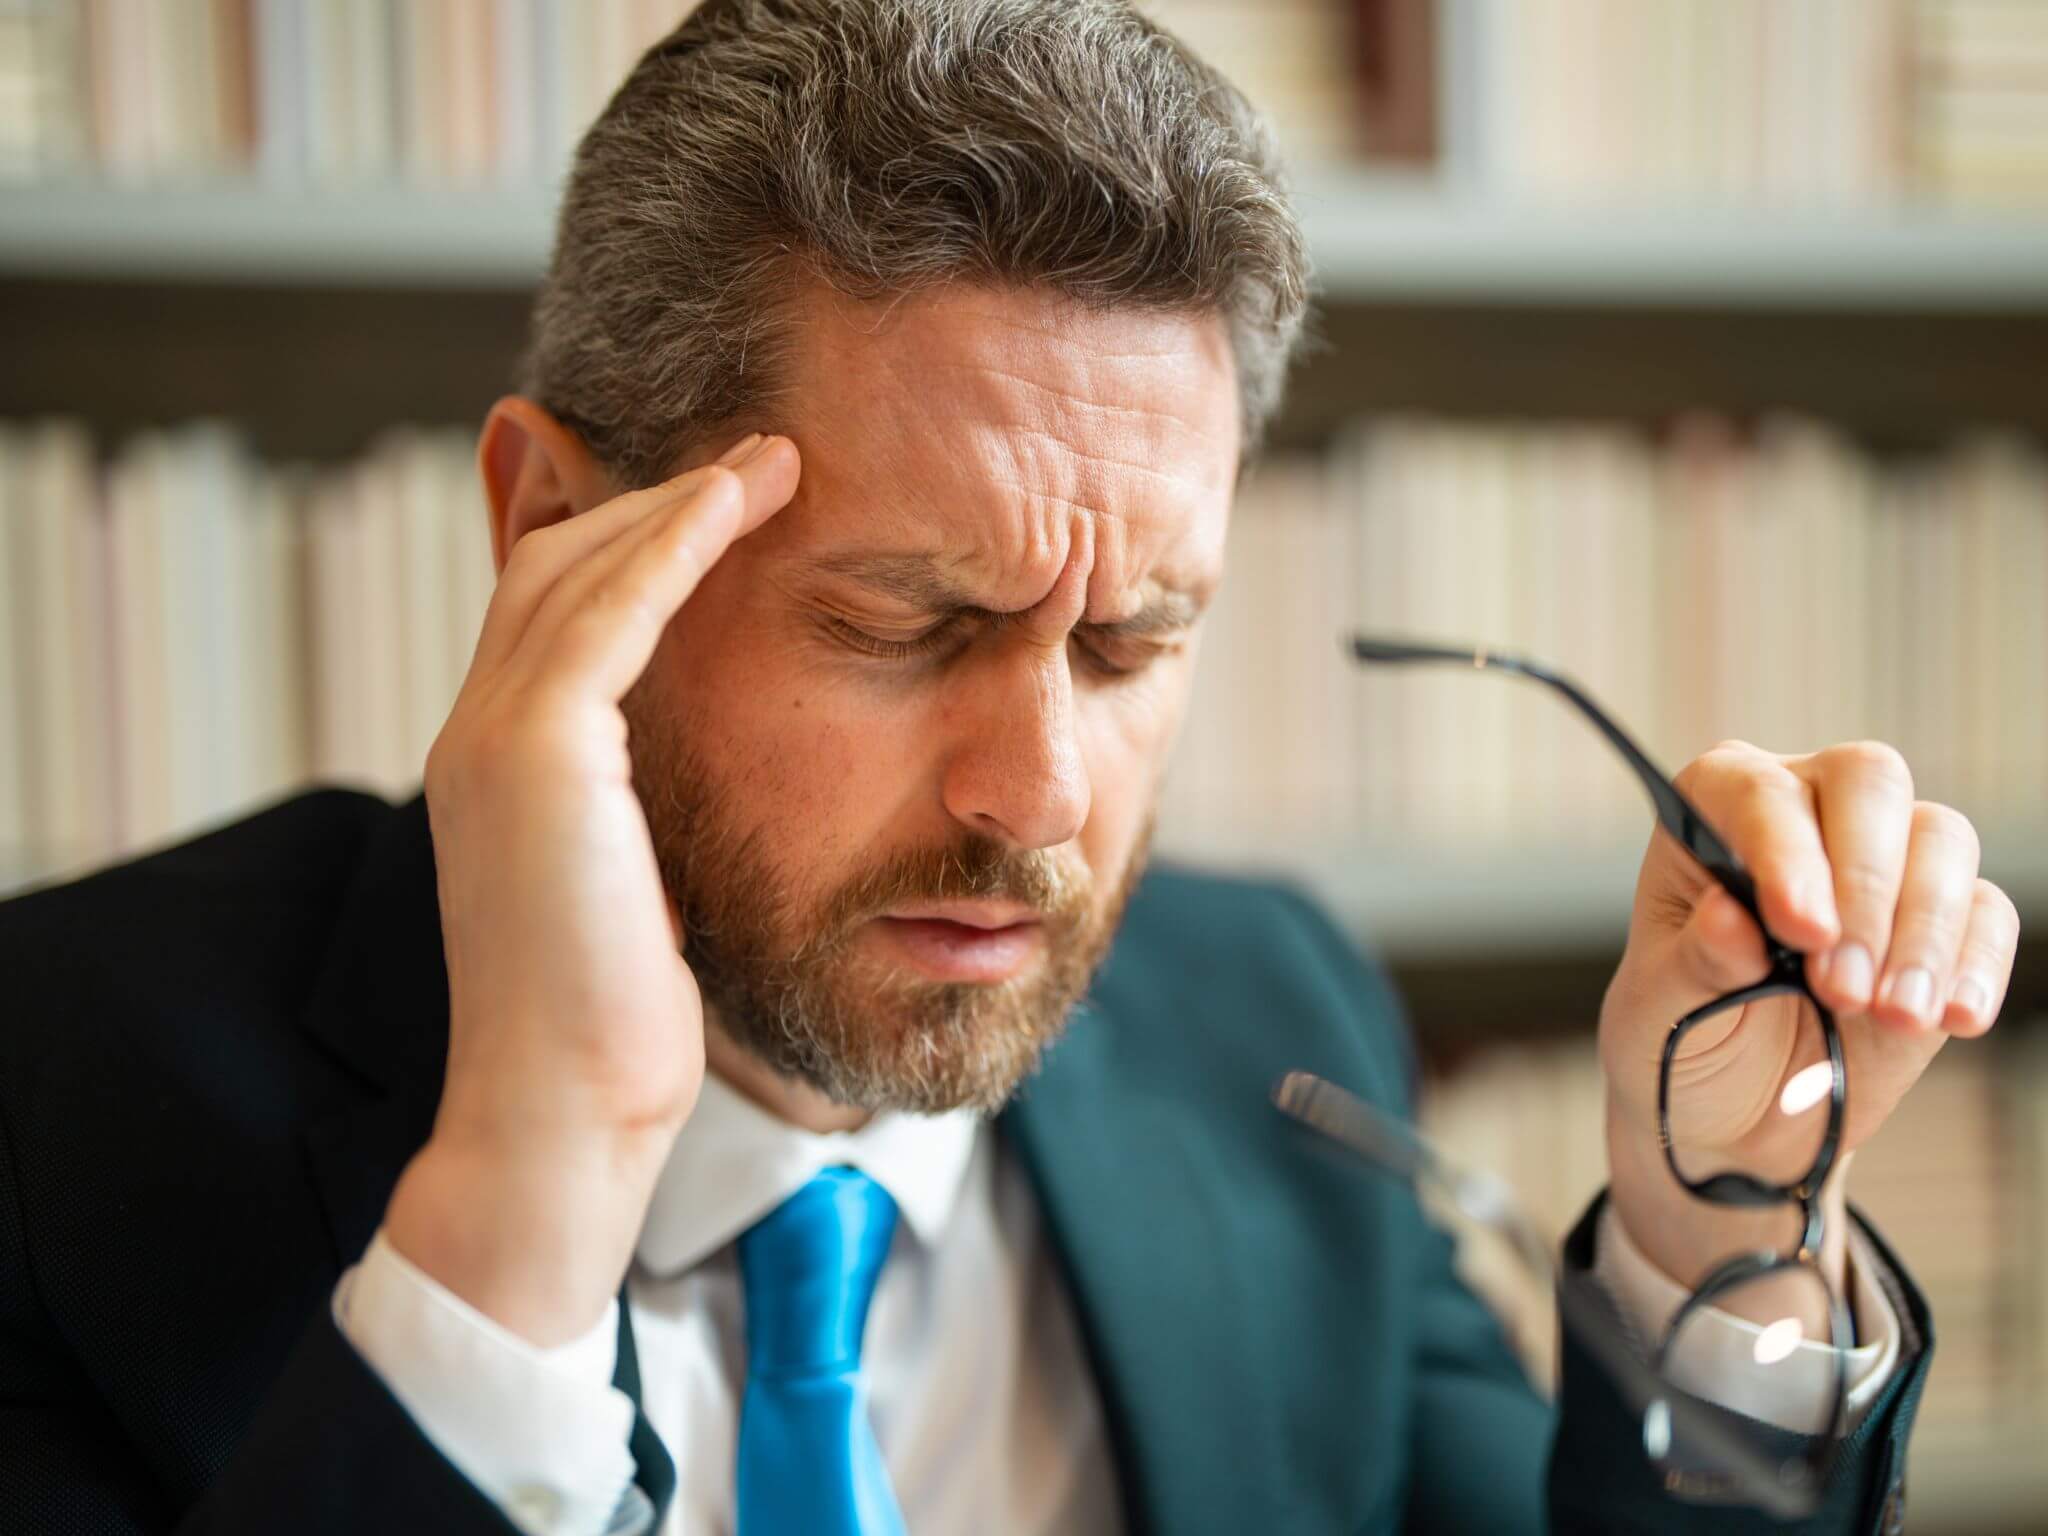 Preventing and managing migraines